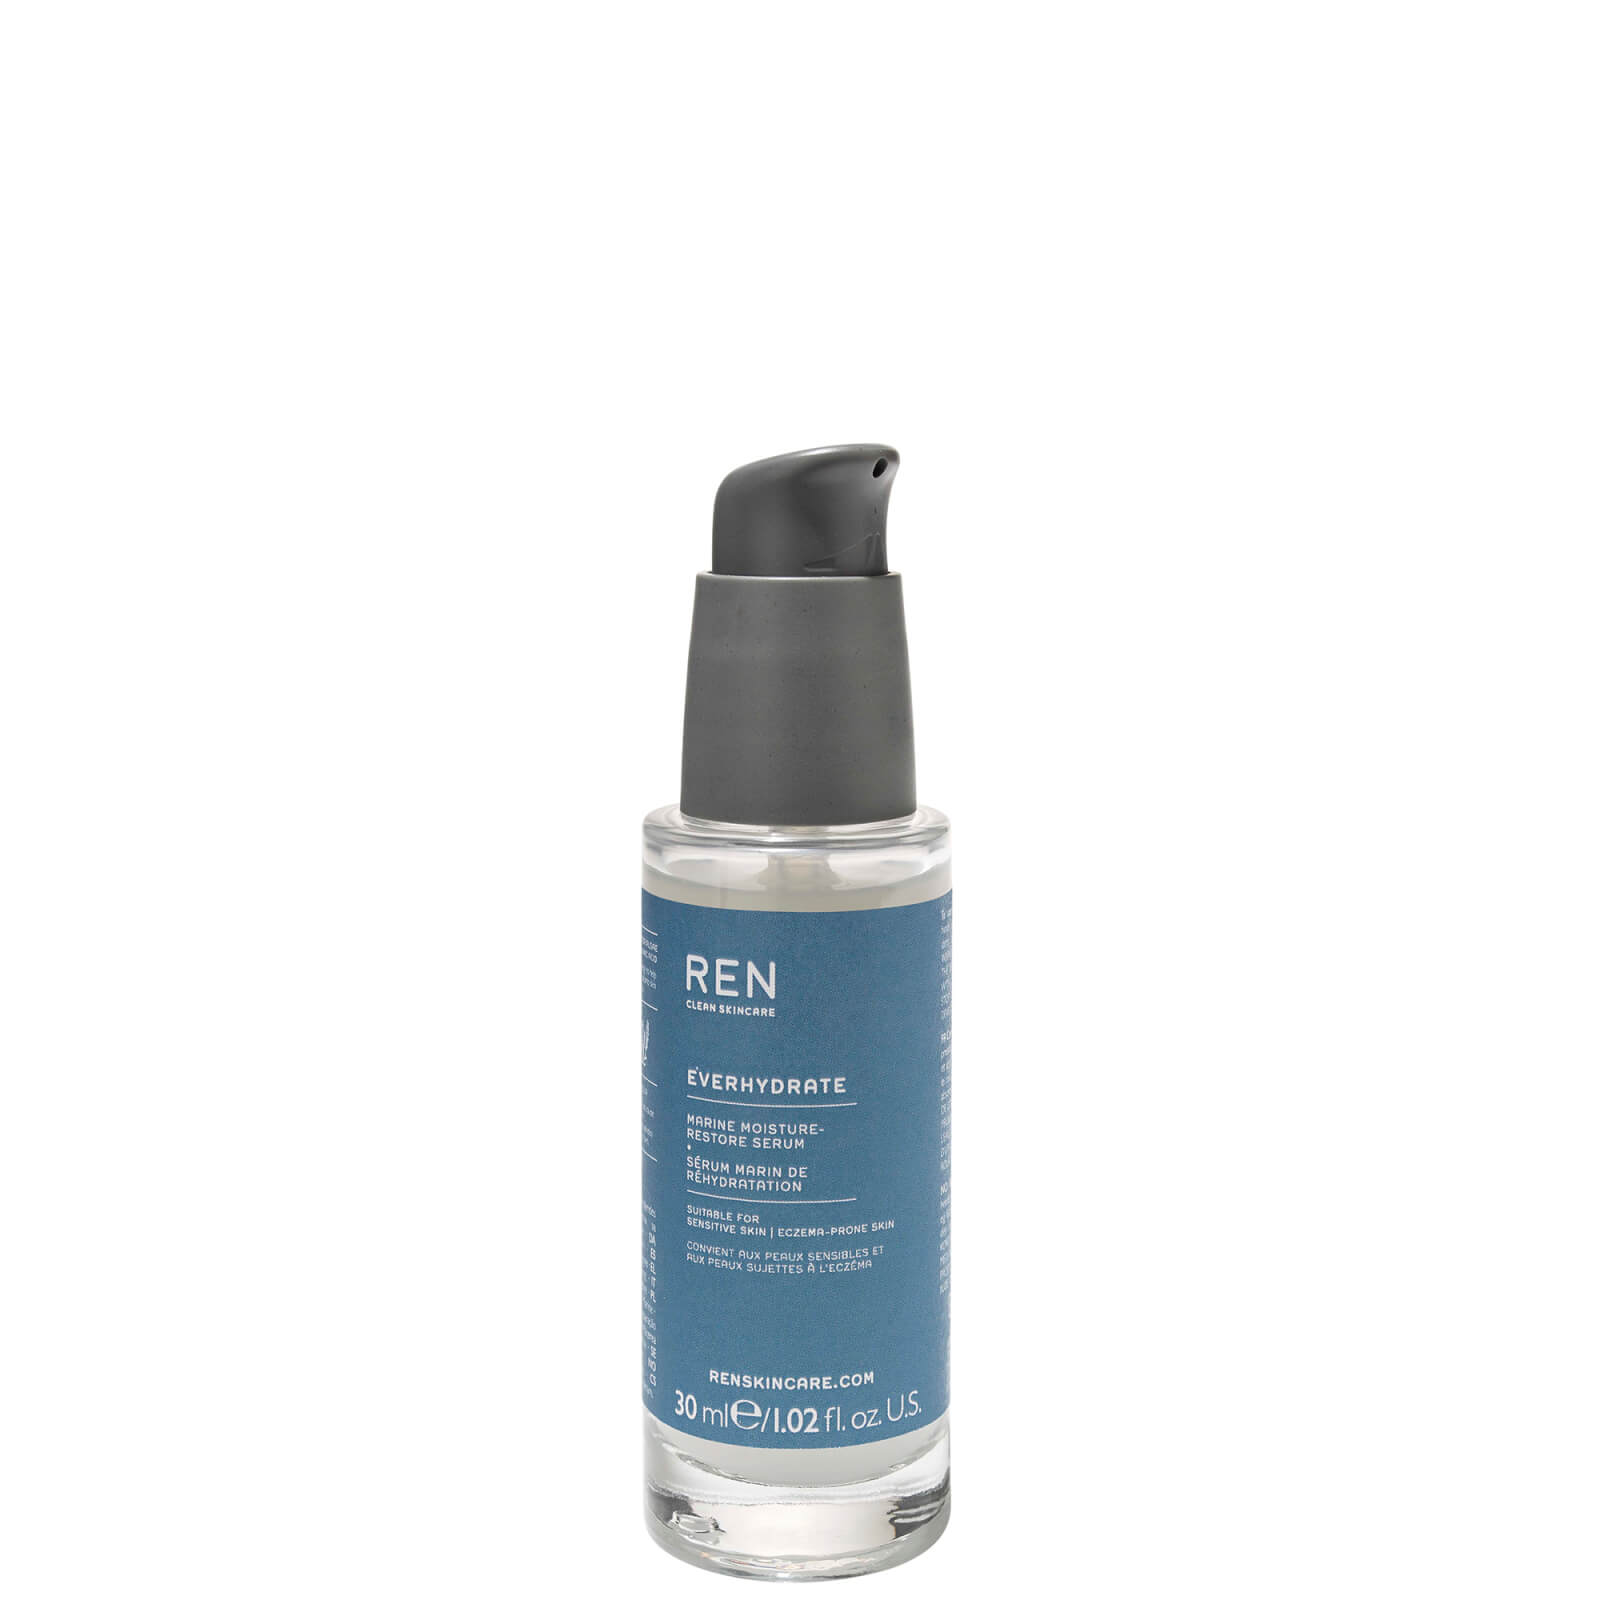 Ren Clean Skincare Everhydrate Marine Moisture-restore Serum 30ml In White